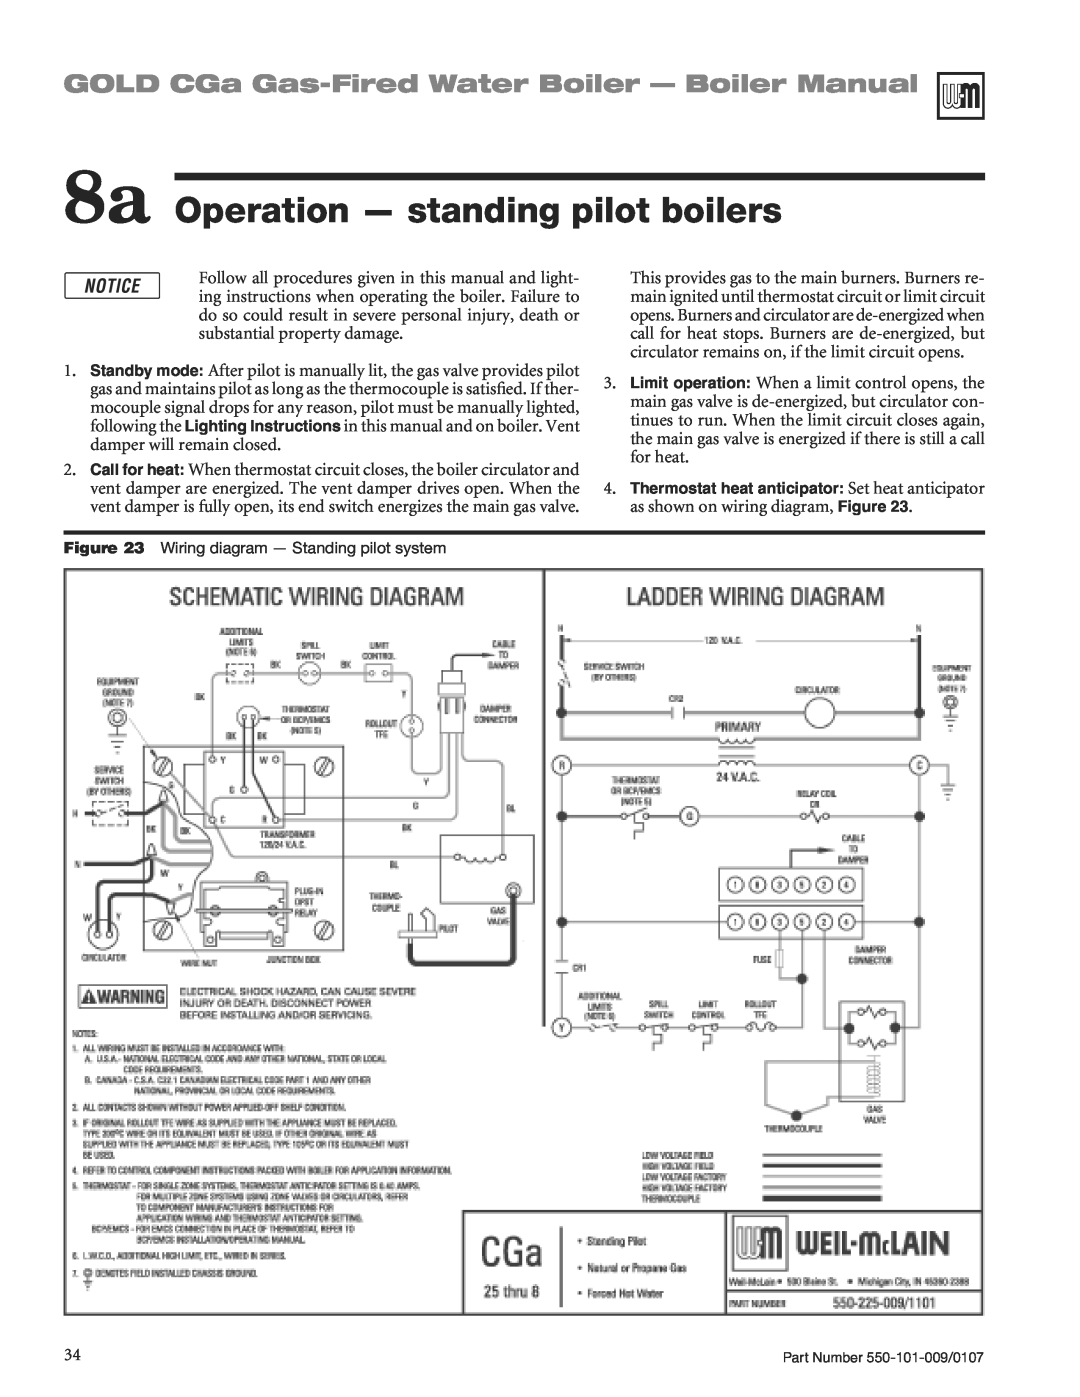 Weil-McLain CGA25SPDN manual 8a Operation - standing pilot boilers, GOLD CGa Gas-FiredWater Boiler - Boiler Manual 